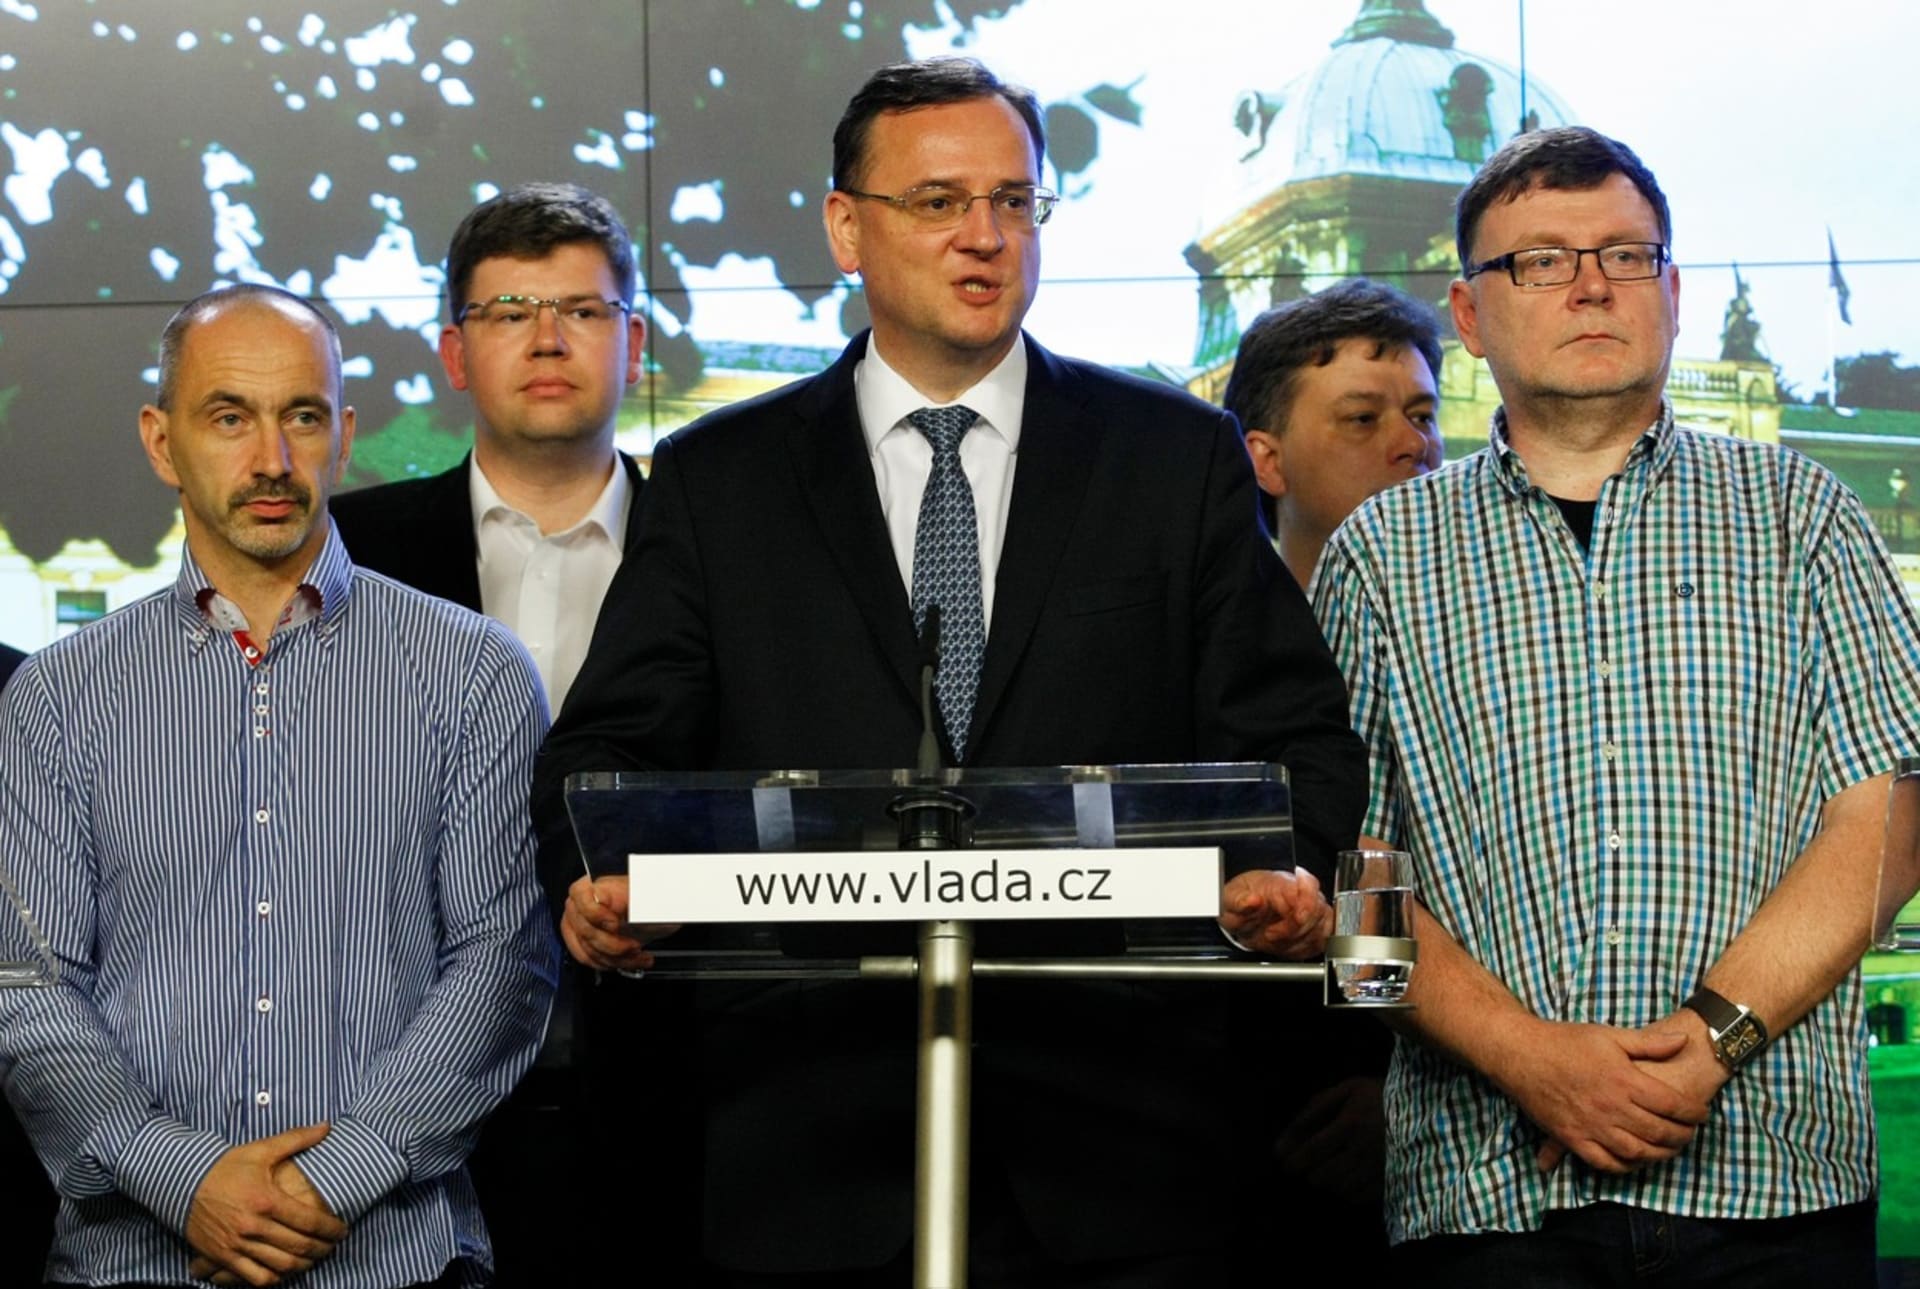 Premiér Petr Nečas oznamuje v červnu 2013 svou rezignaci. Po zásahu ÚOOZ ve Strakově akademii tak padla vláda.